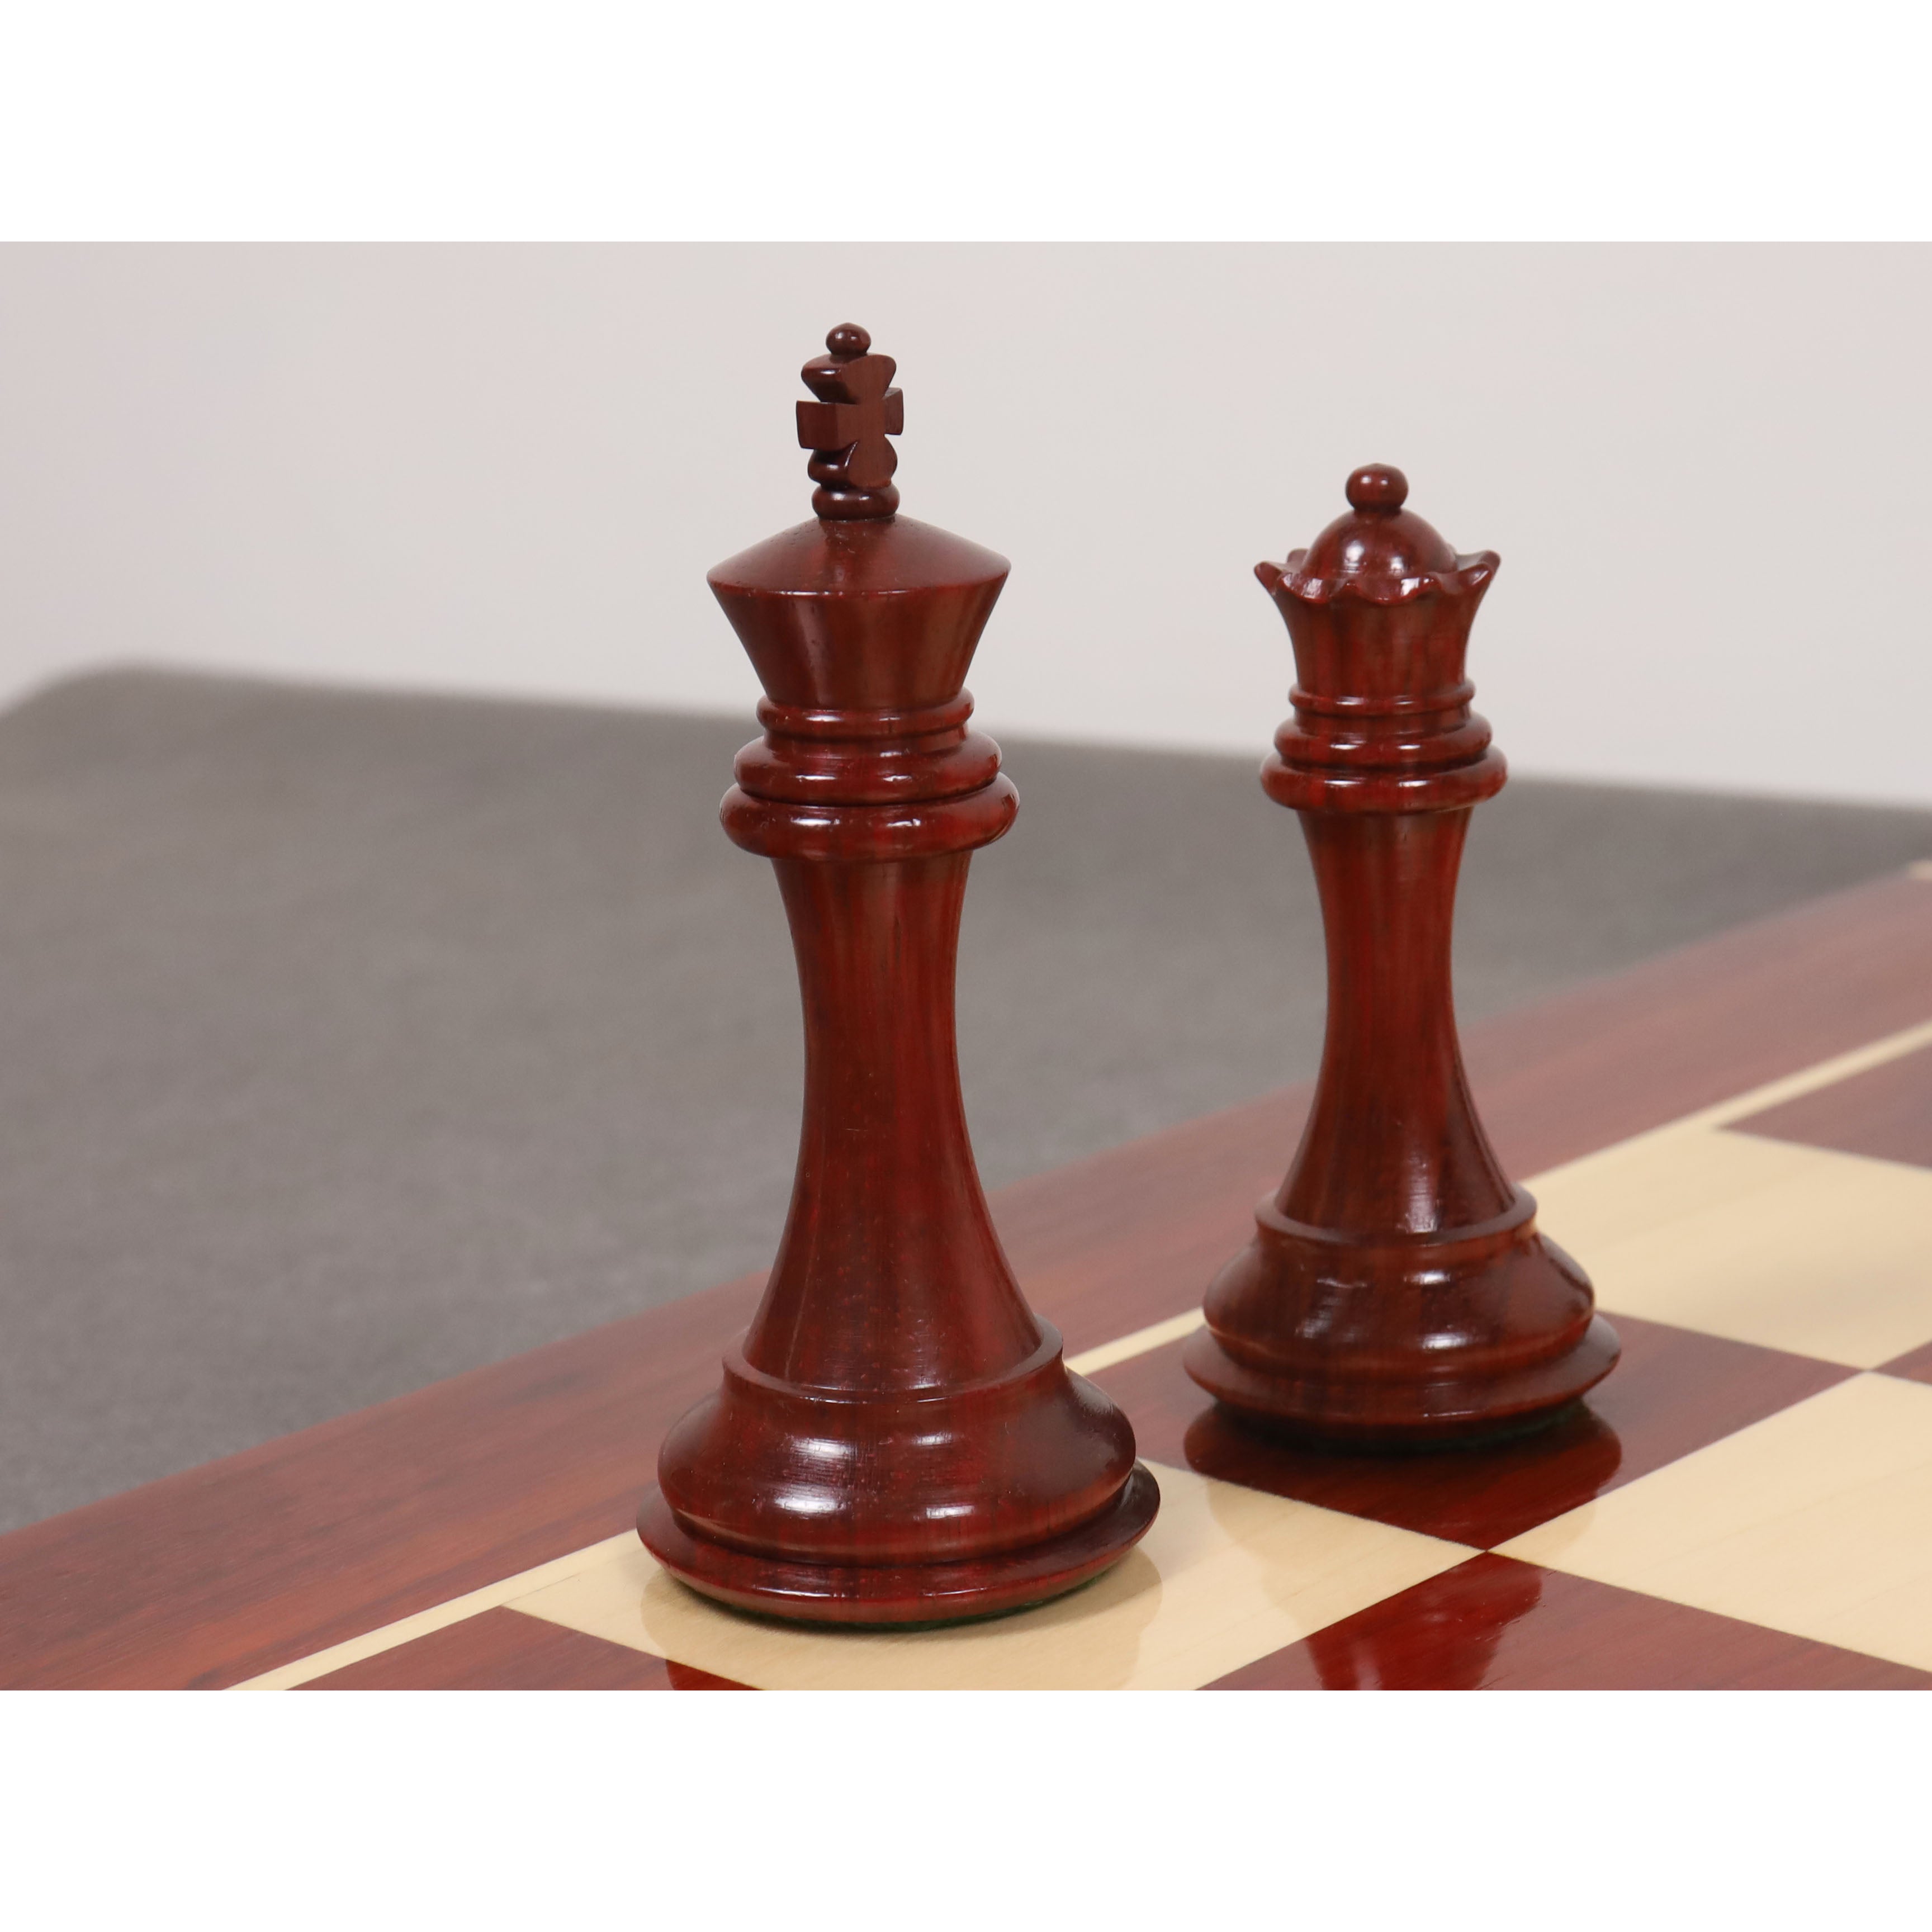 Best wooden chess set under $60! Check out this Wegiel Chess Set